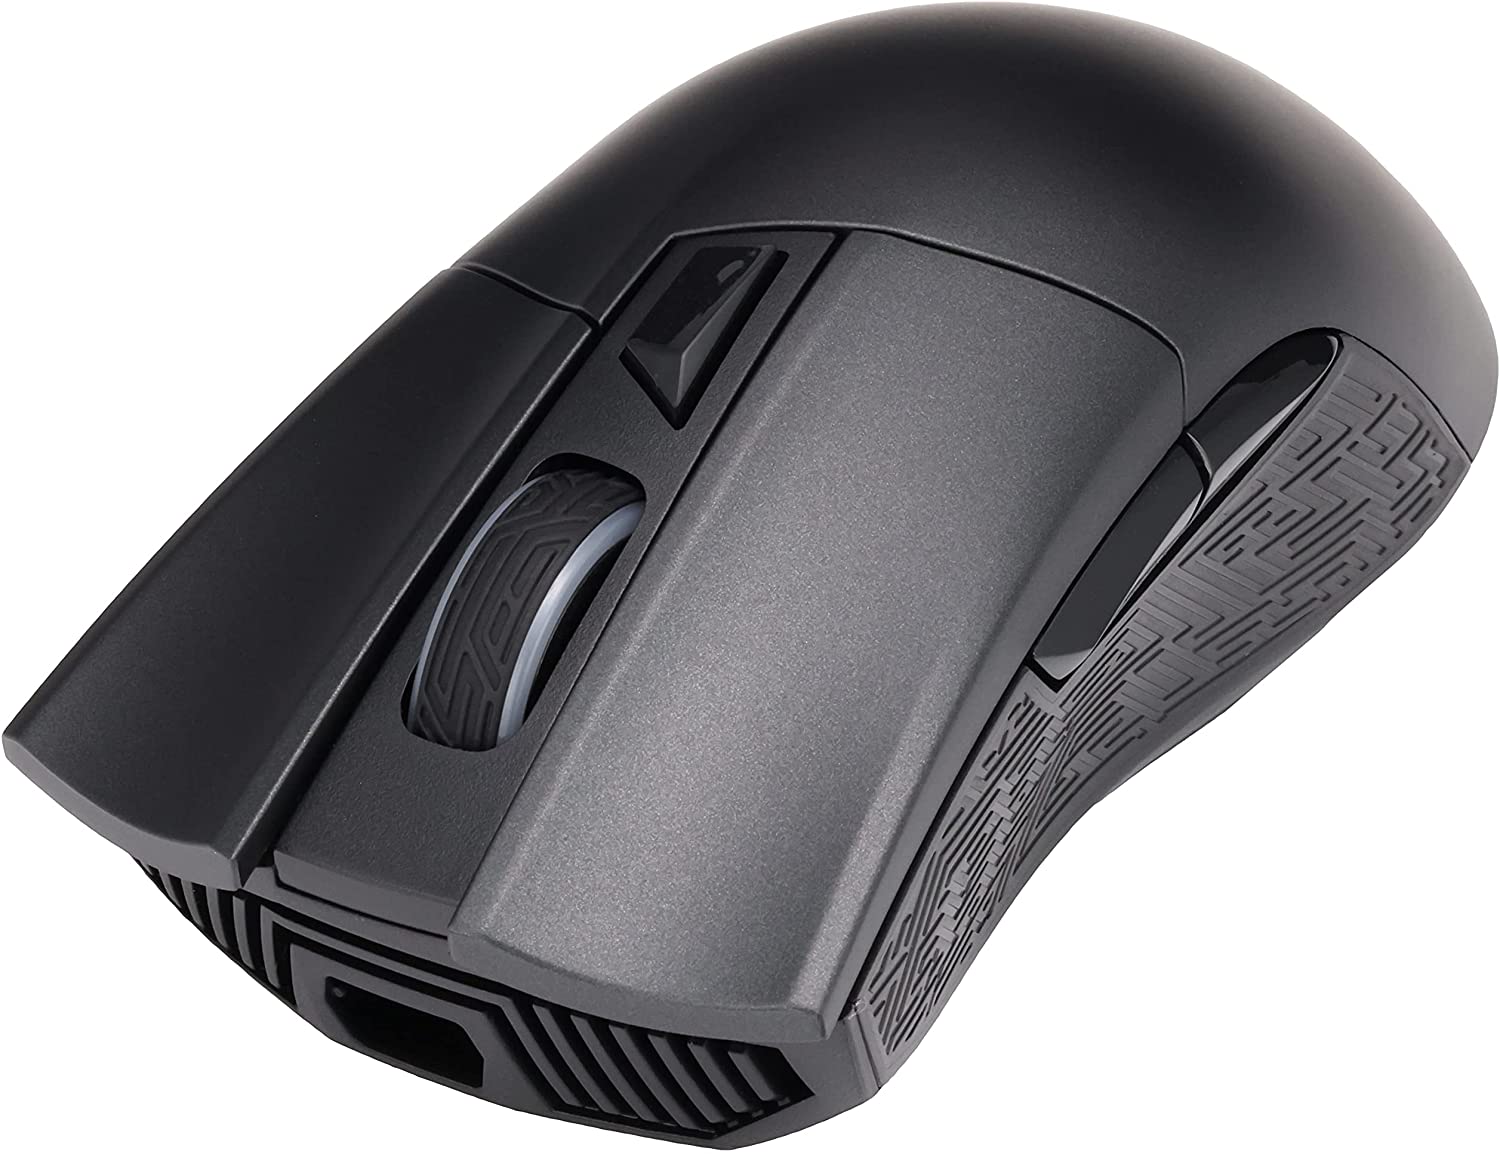 ASUS ROG Gladius II Wireless Optical Ergonomic Gaming Mouse (16000 DPI Optical, 50G Acceleration, 400 IPS Sensor, Swappable Switches, RGB Lighting)